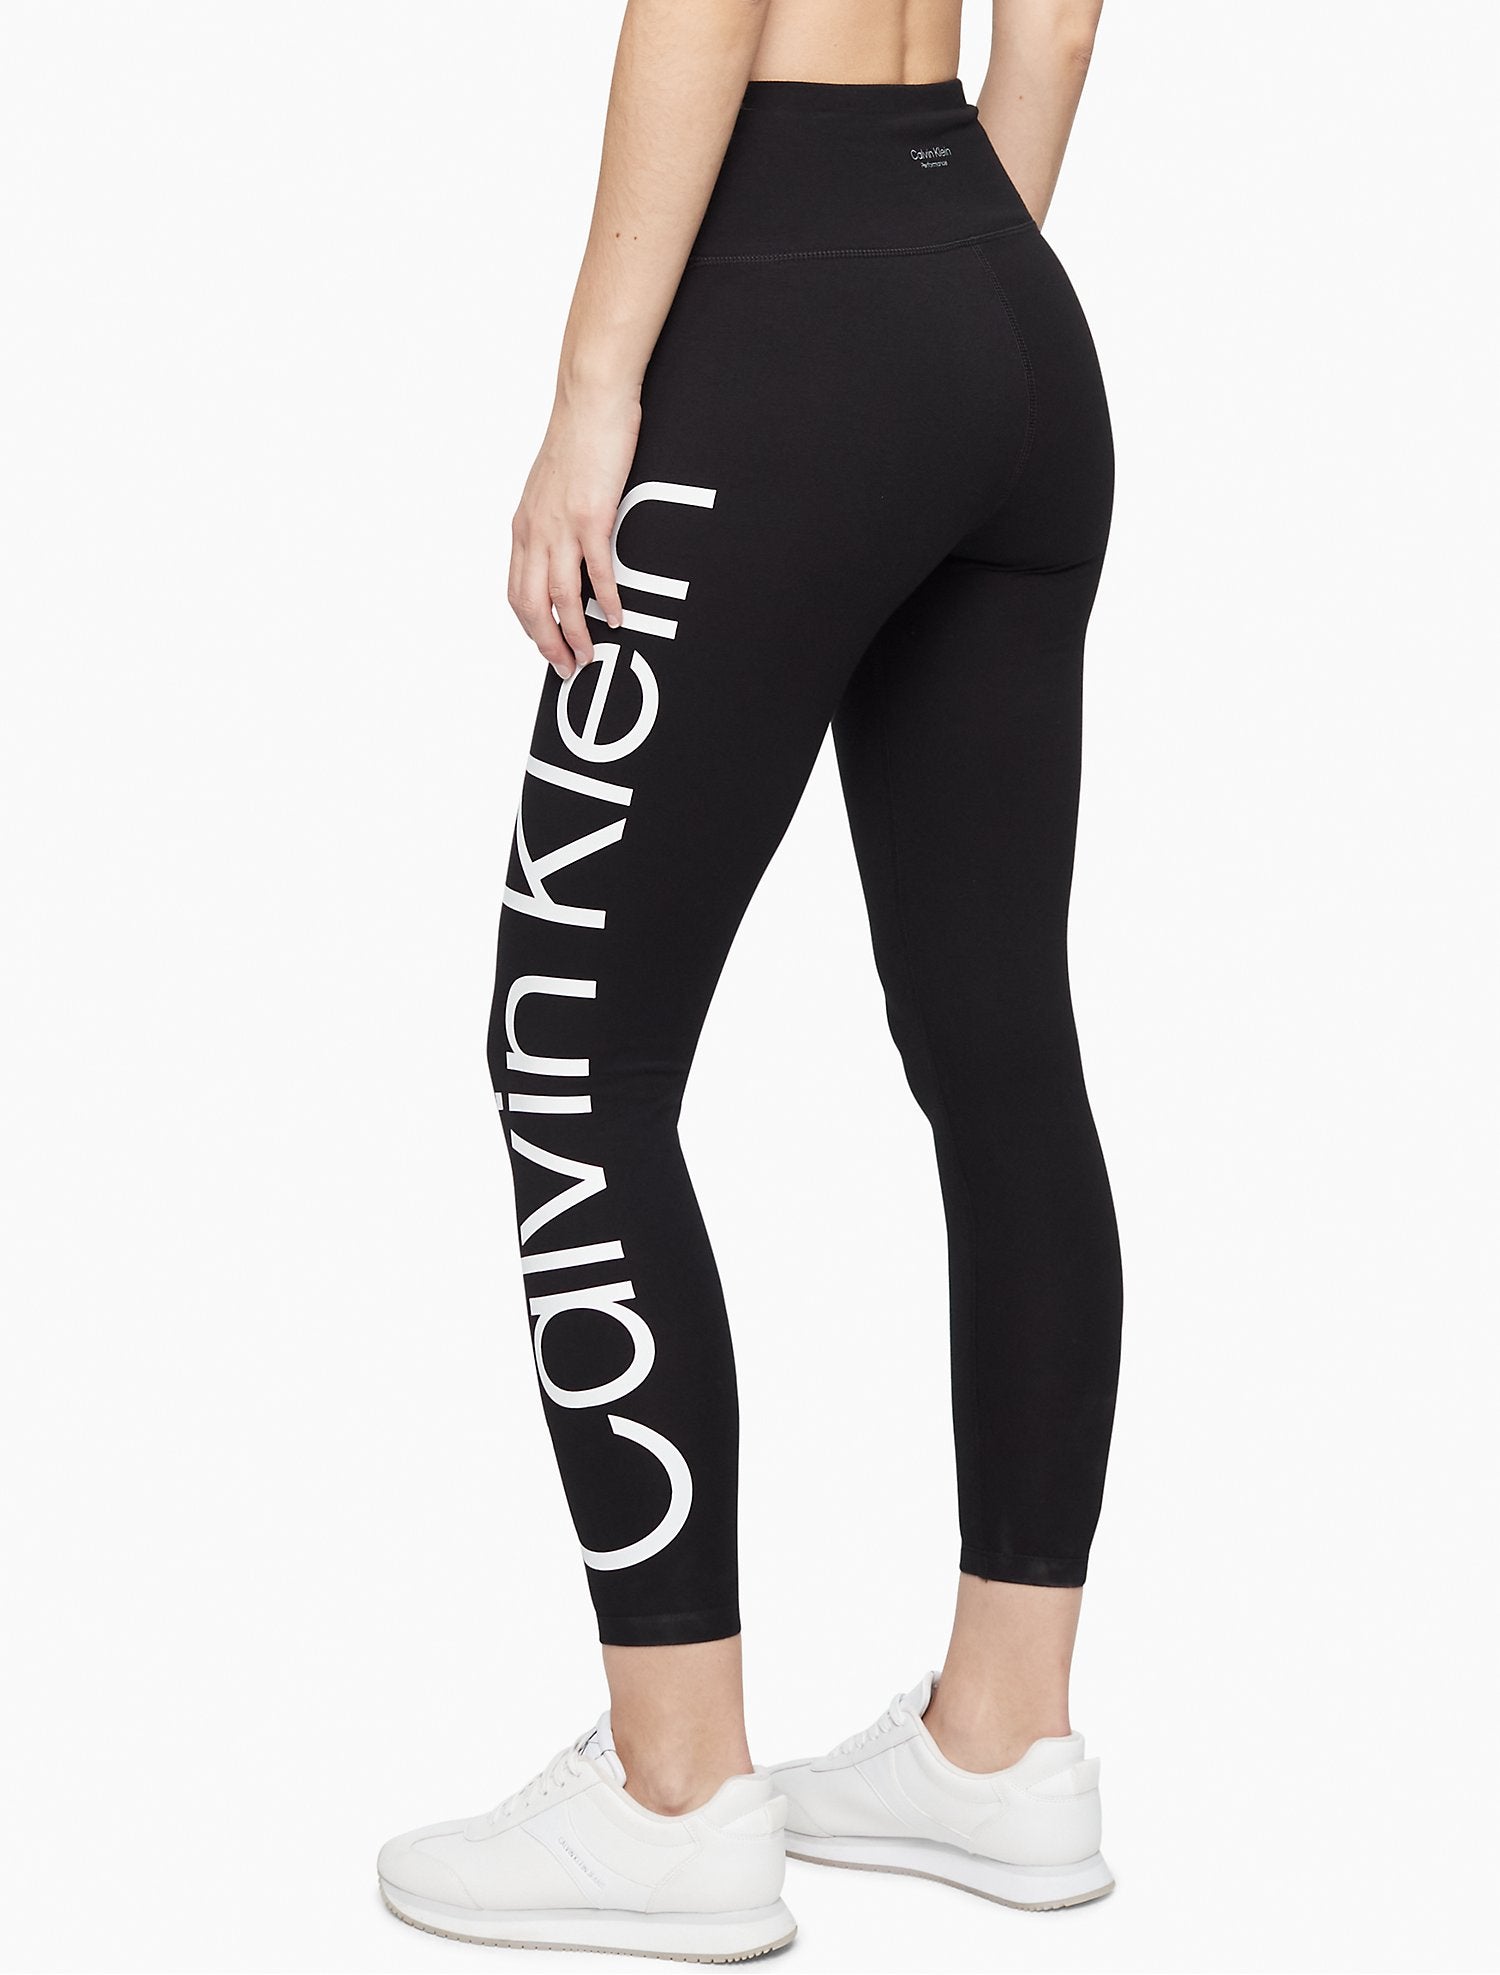 Calvin Klein Performance Logo Legging Black & White Color Size Medium